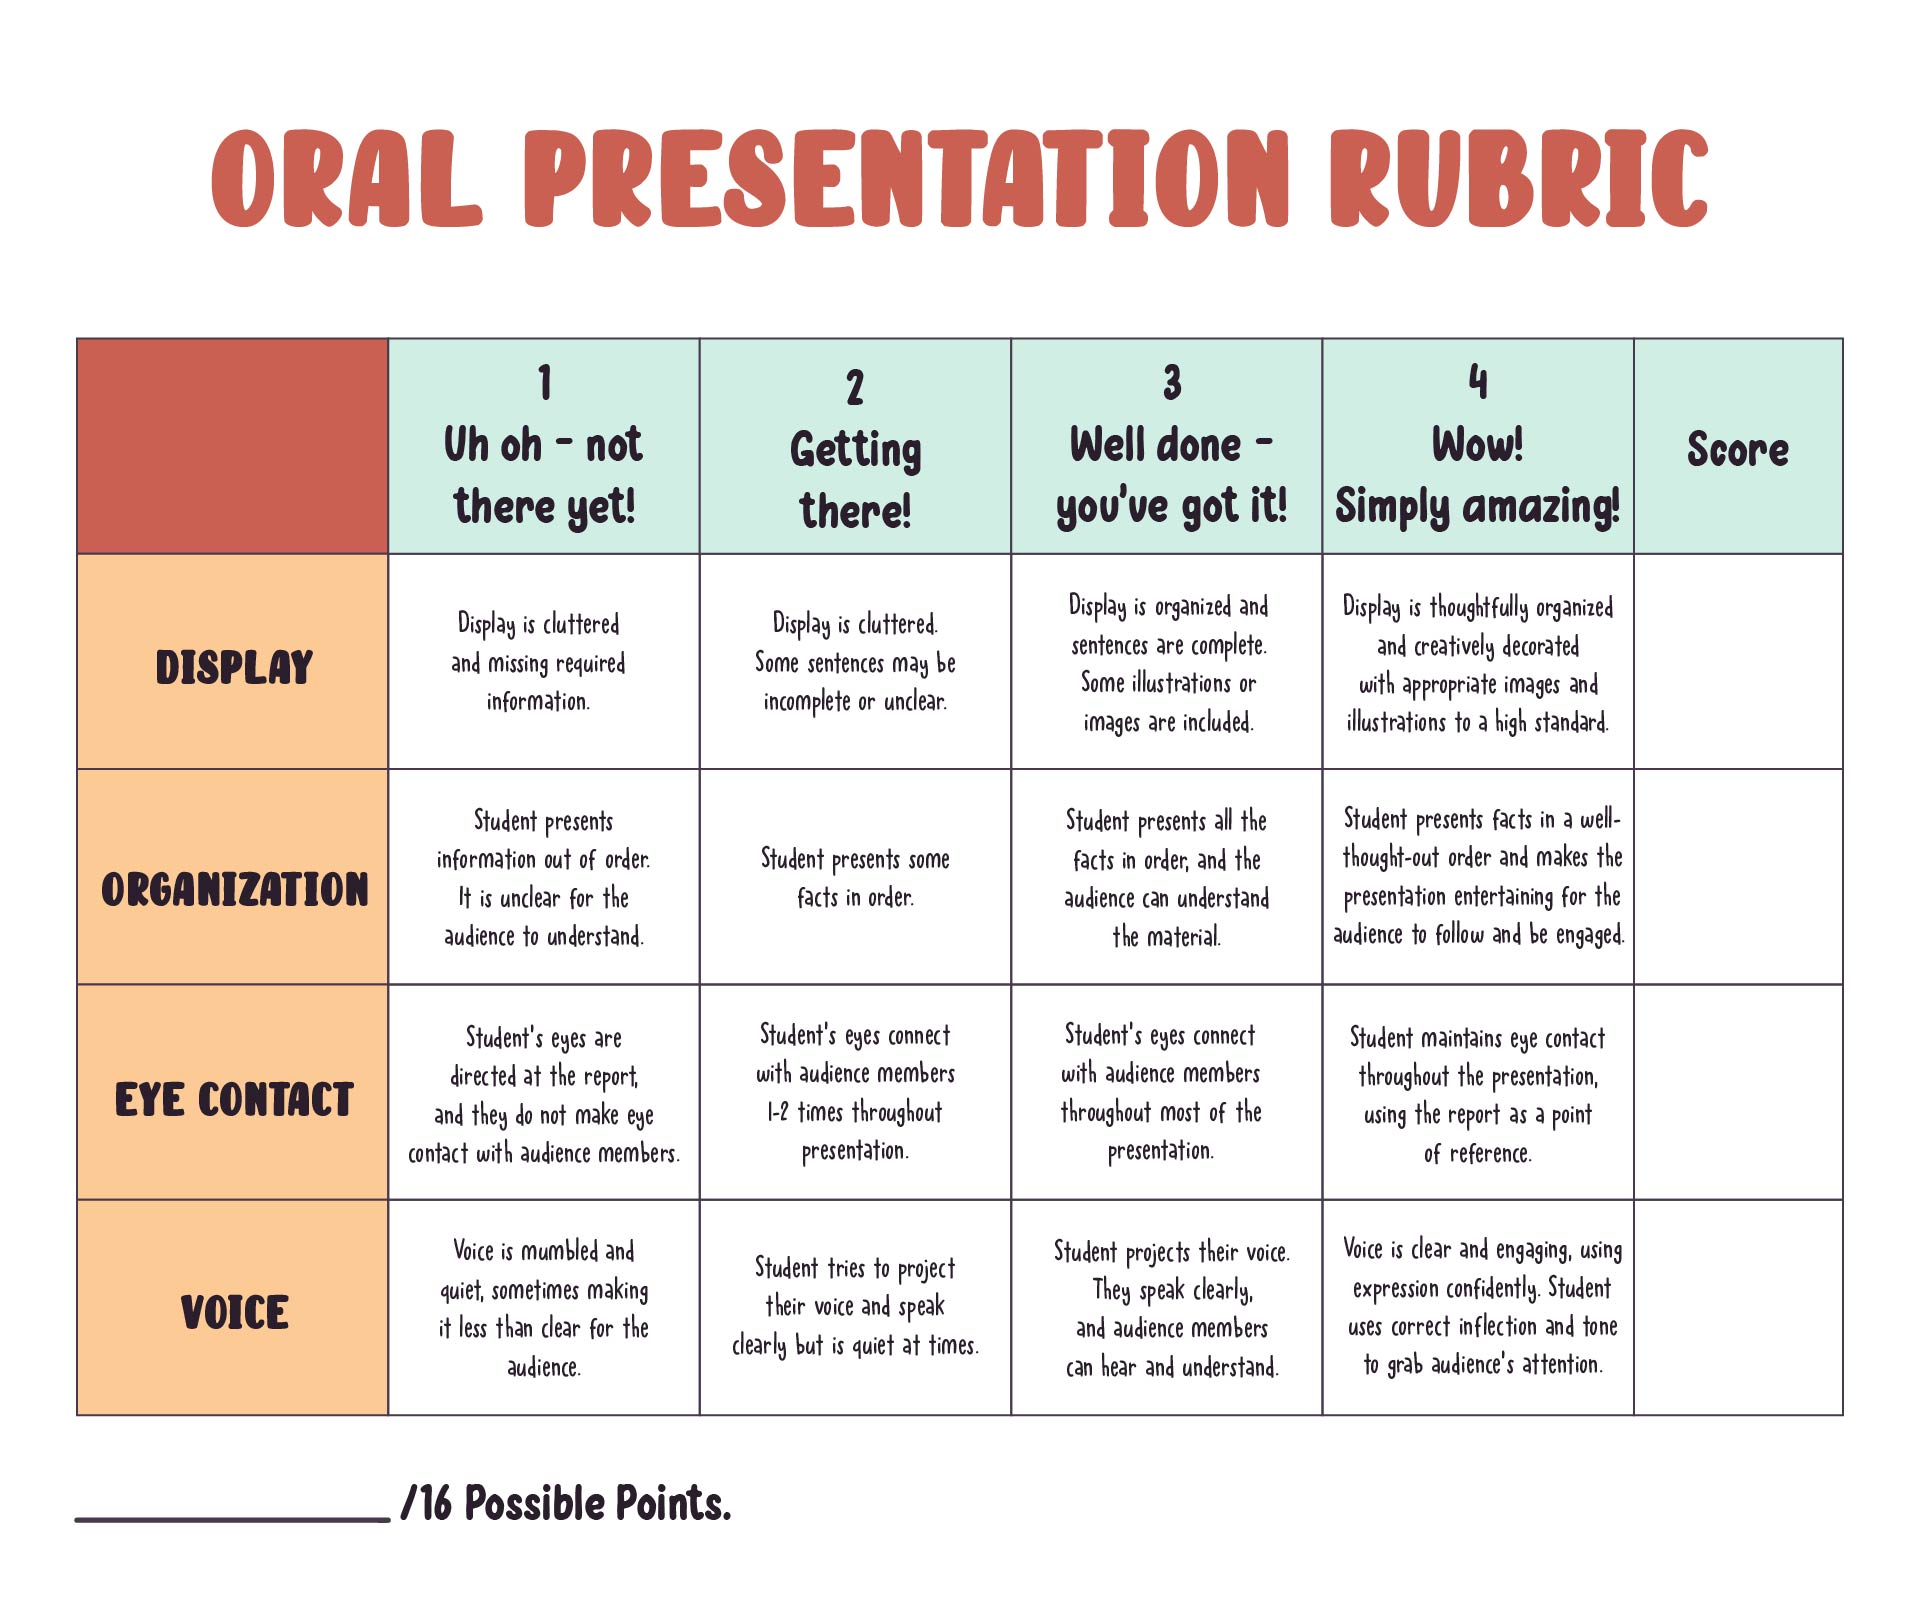 grading-rubrics-for-oral-presentations-teen-free-vids